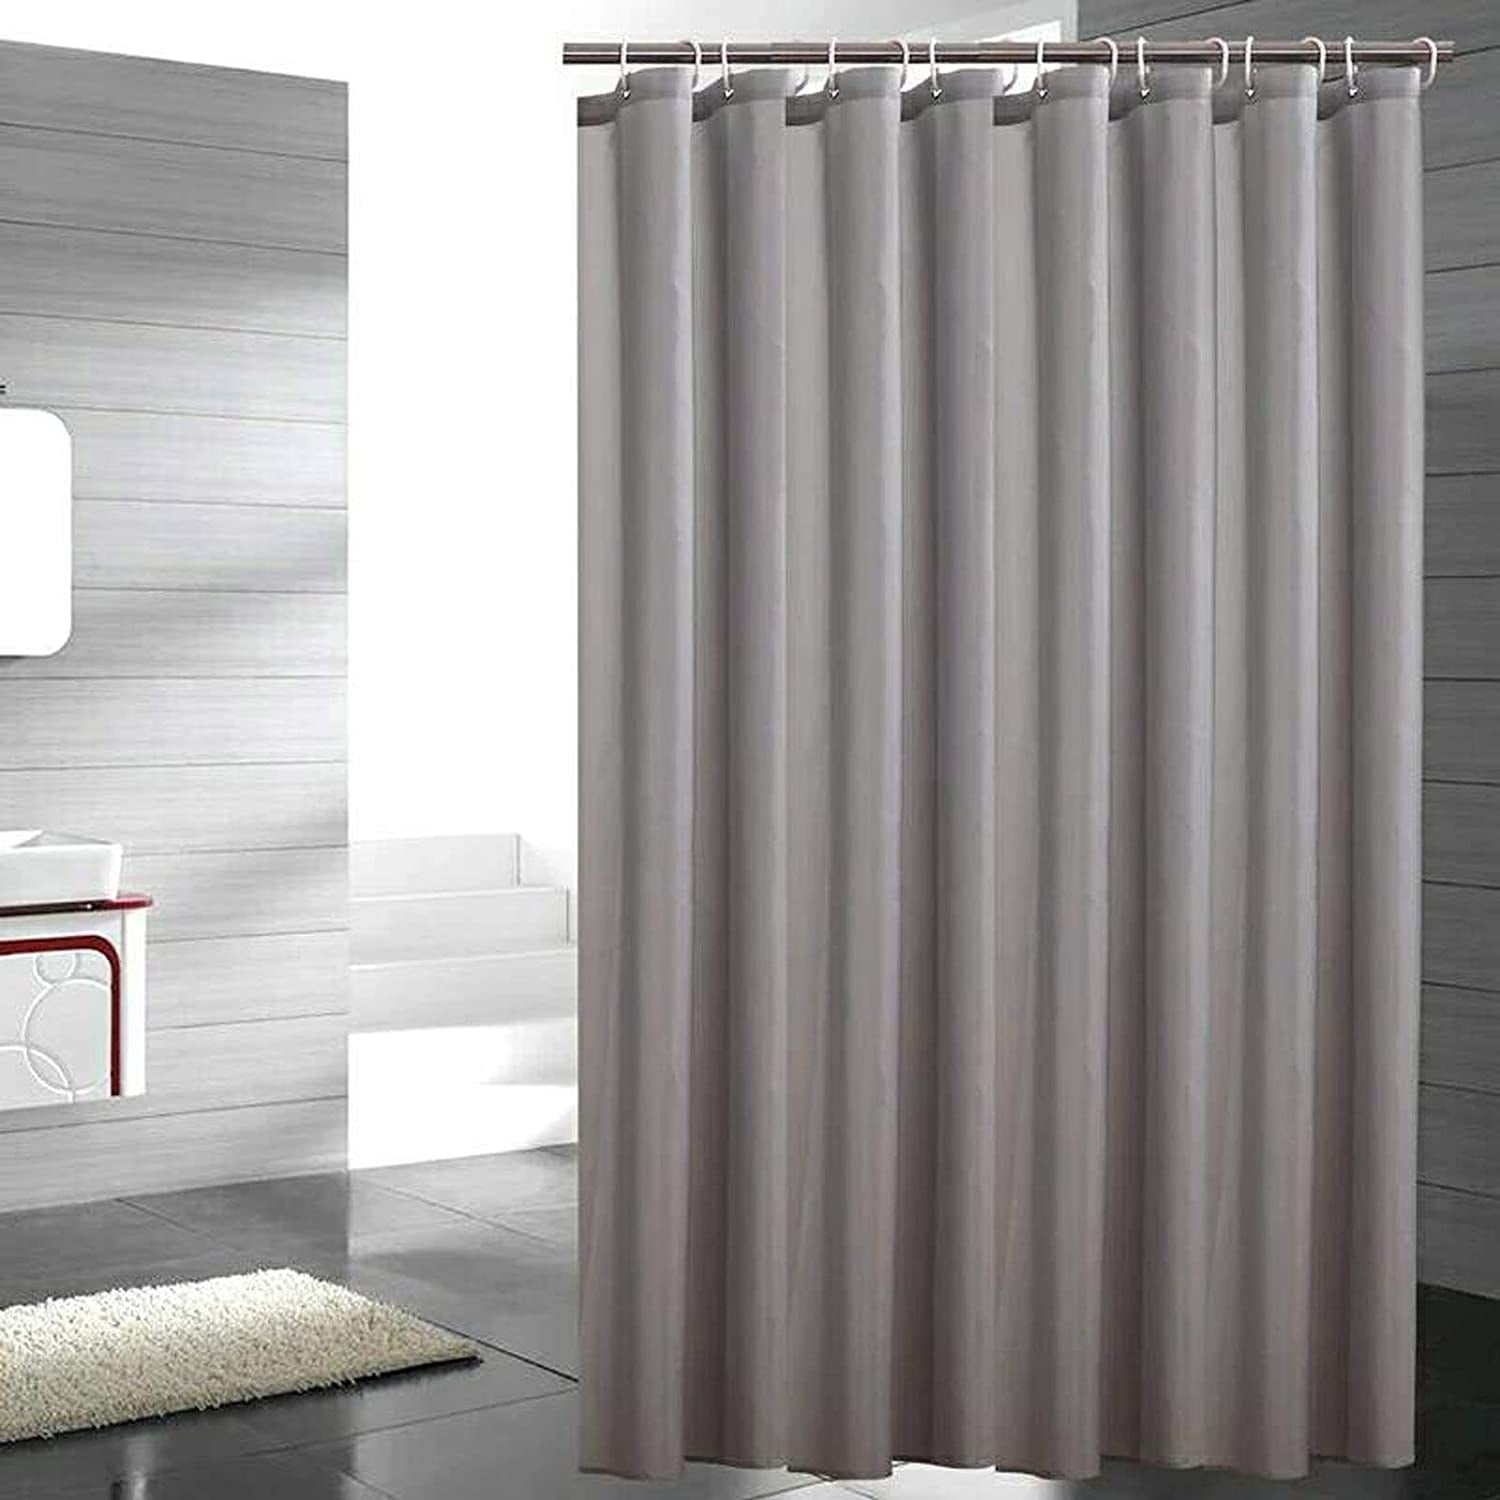 Modern Fabric Shower Curtain Bath Liner Machine Washable Waterproof 72 x 72 Inch 